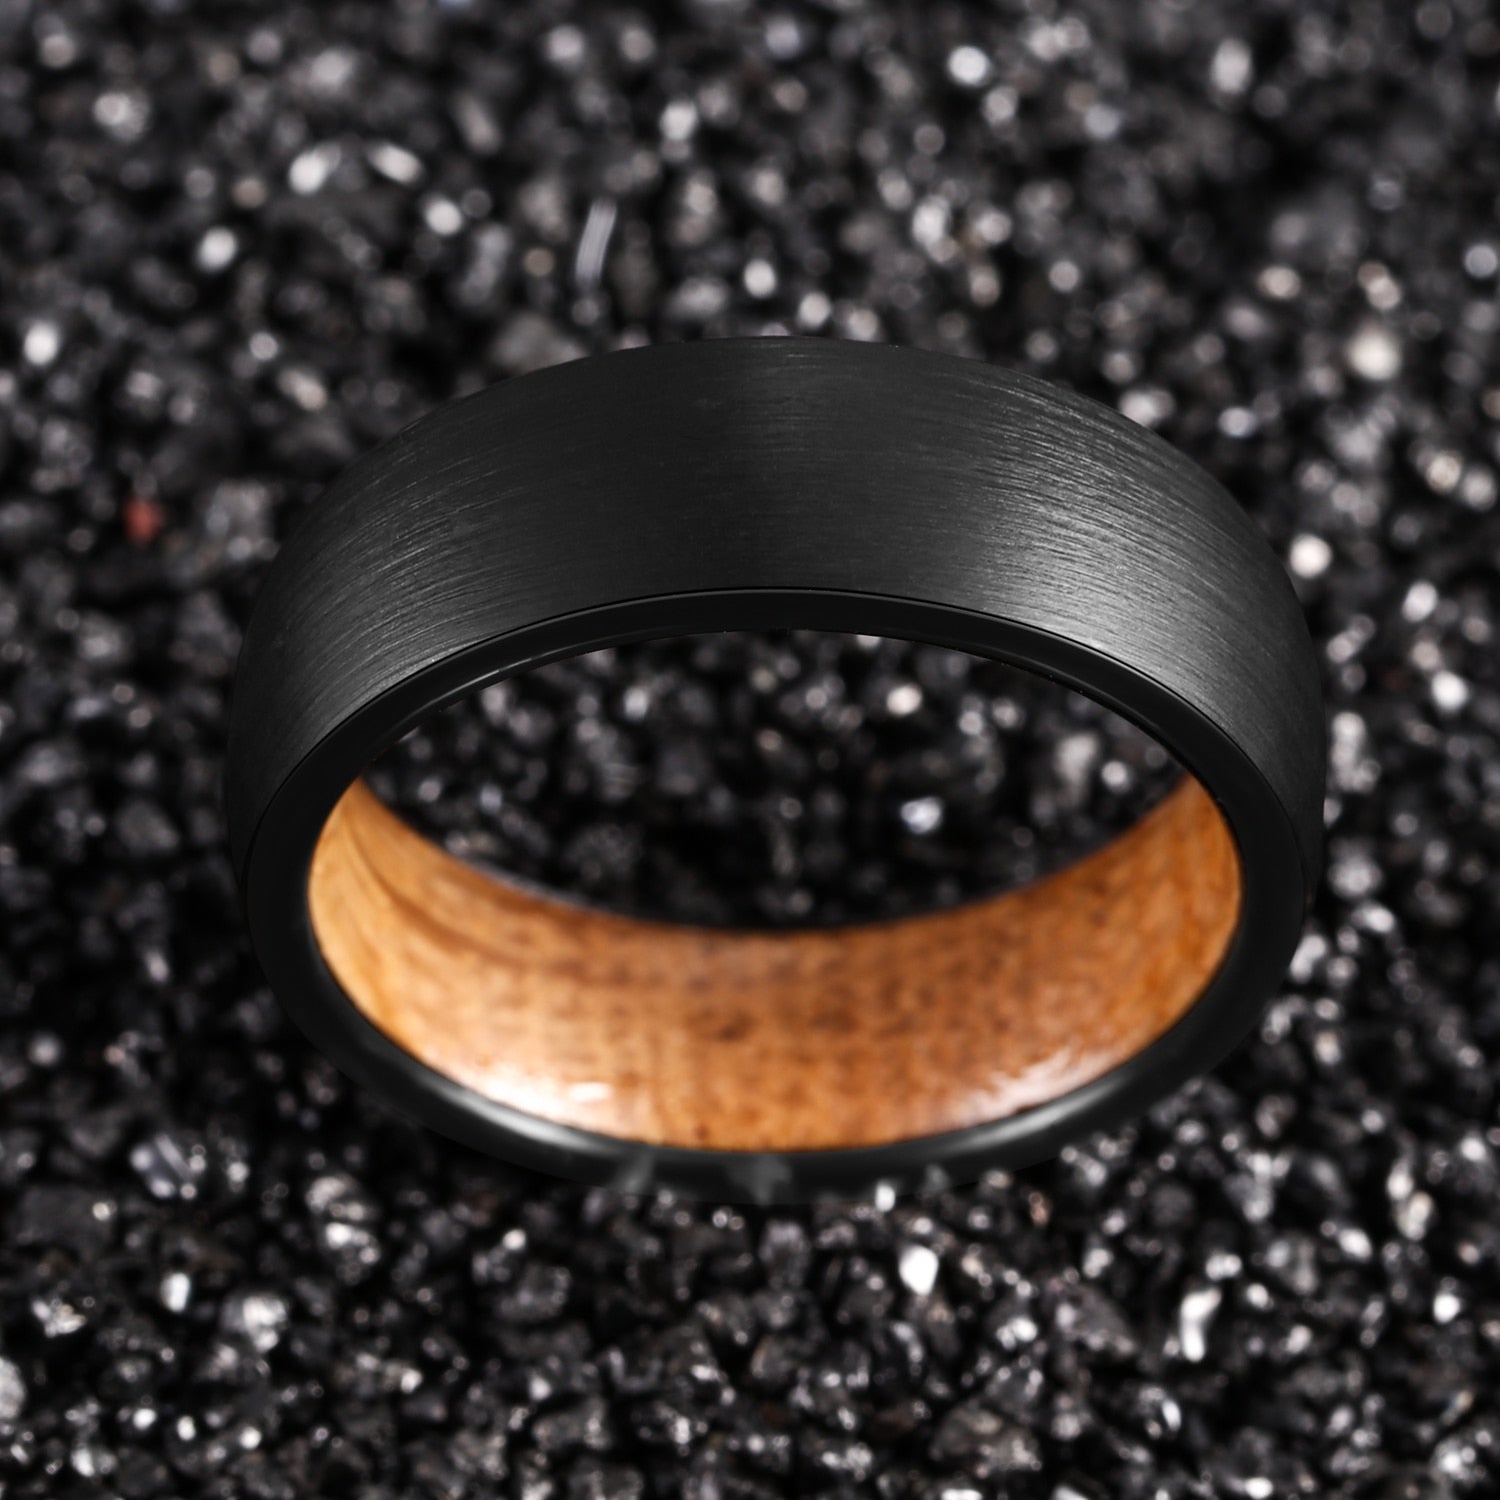 7mm Natural Oak Barrel Wood & Black Tungsten Unisex Ring